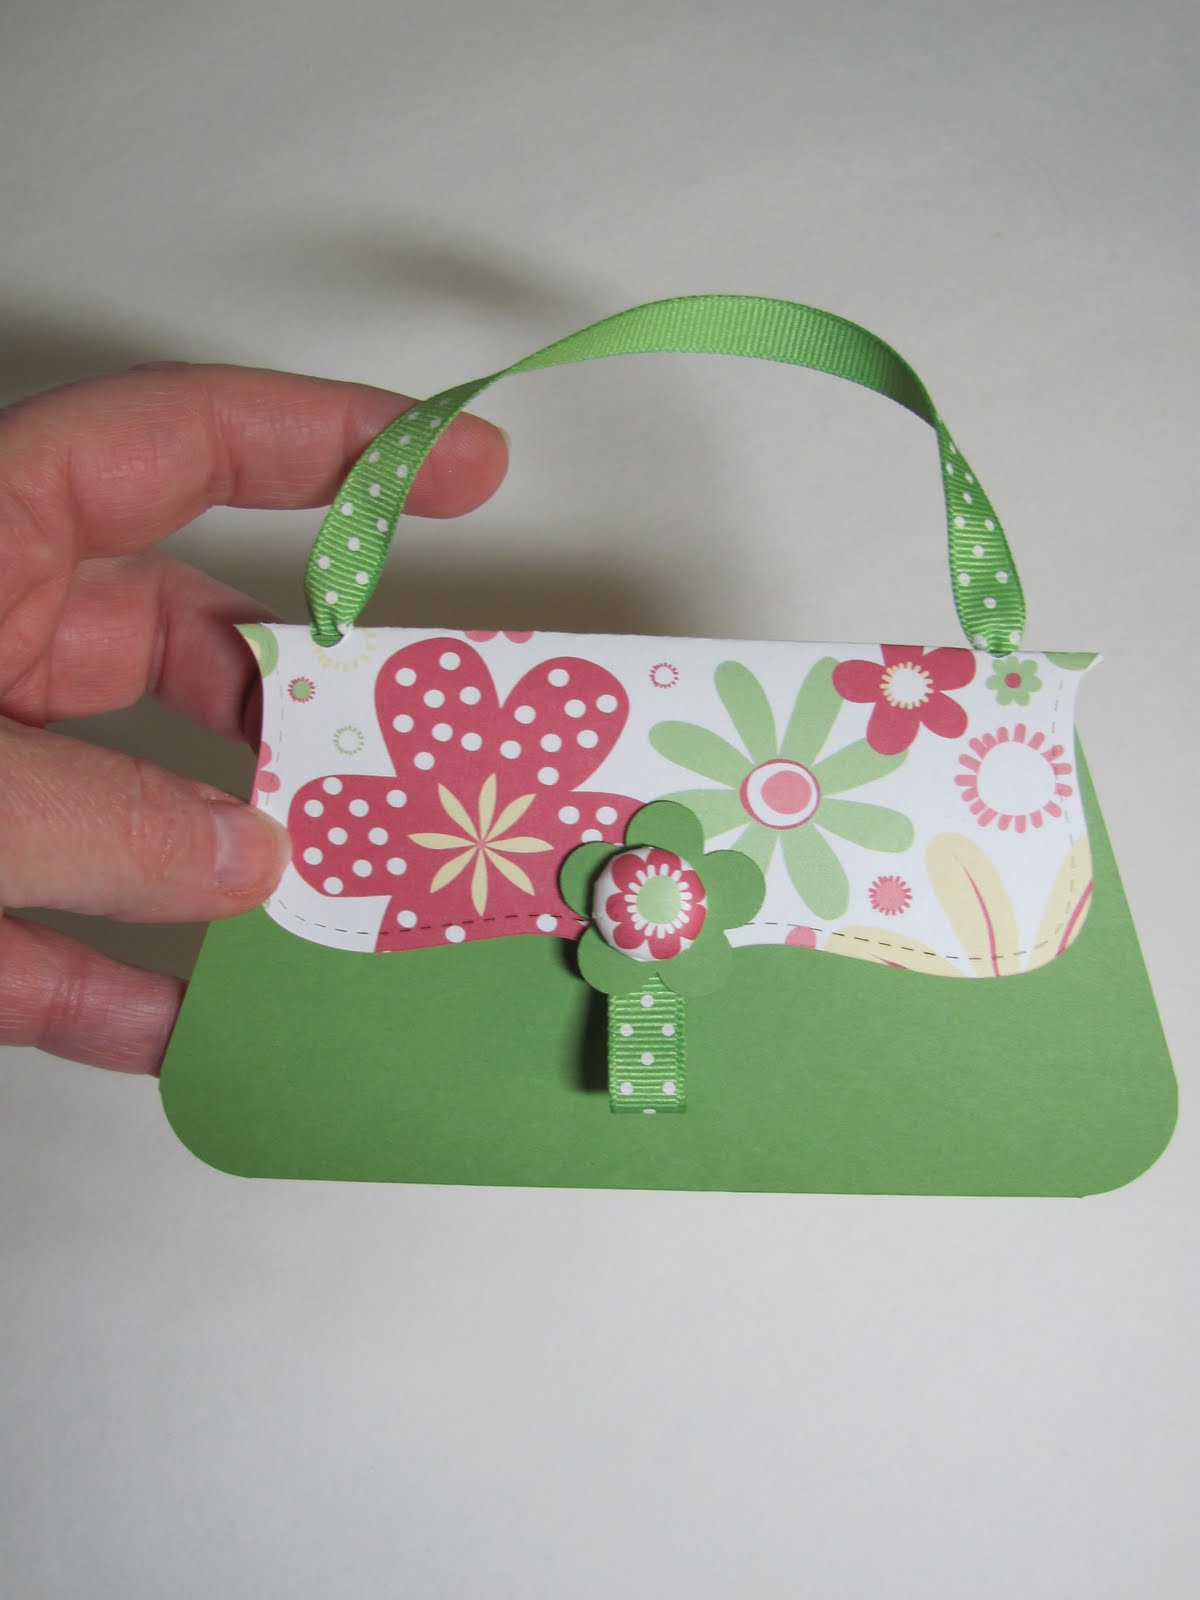 crafting-4-fun-purse-invitation